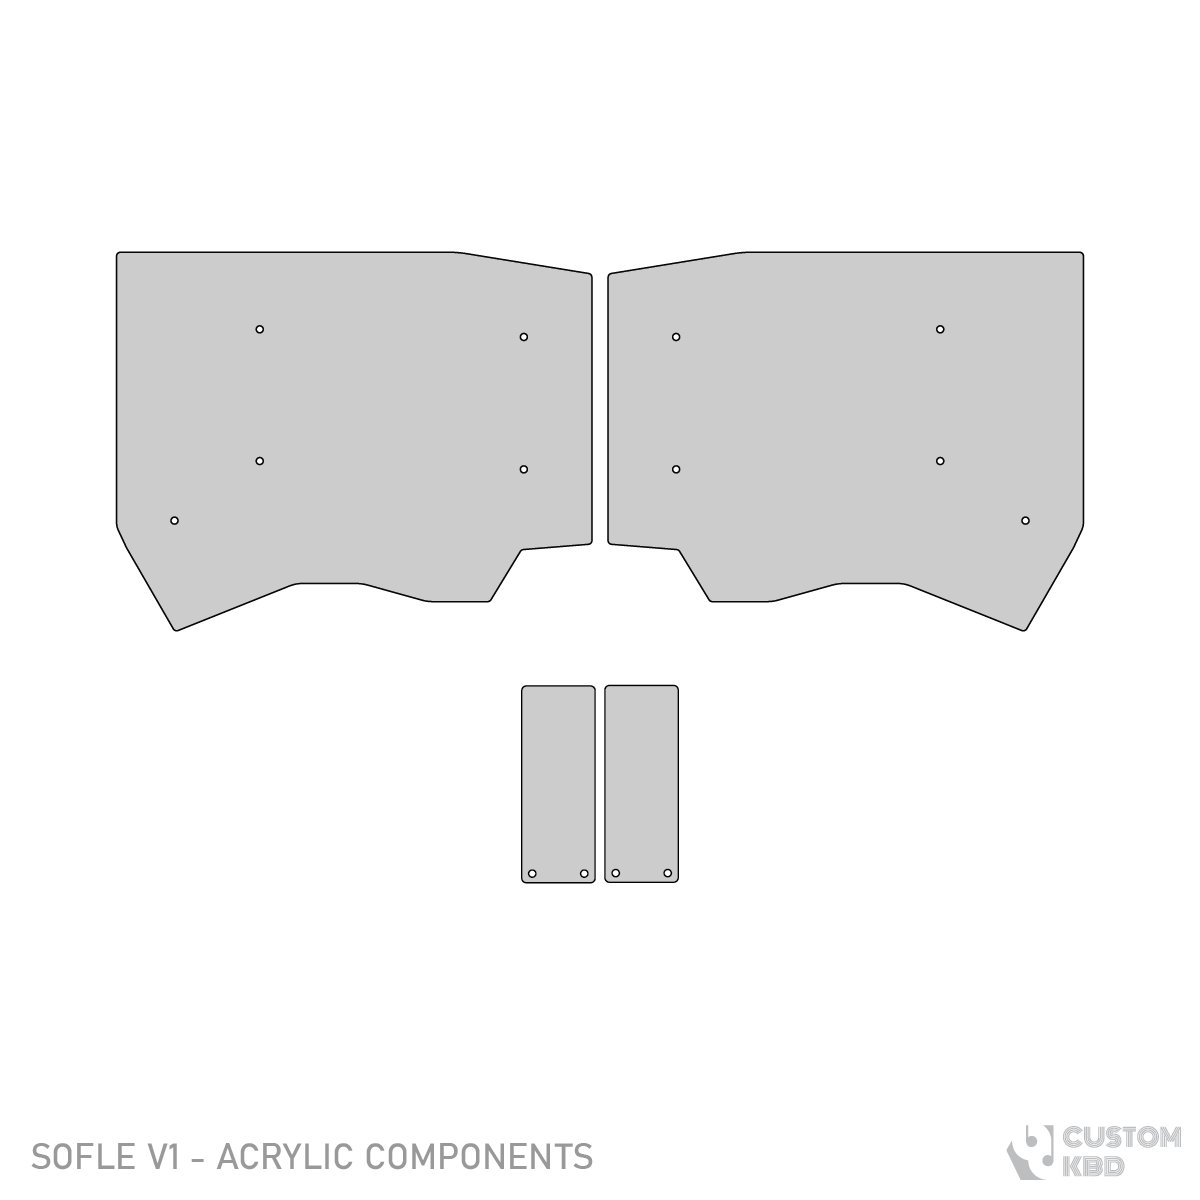 Sofle V1 - Acrylic Components